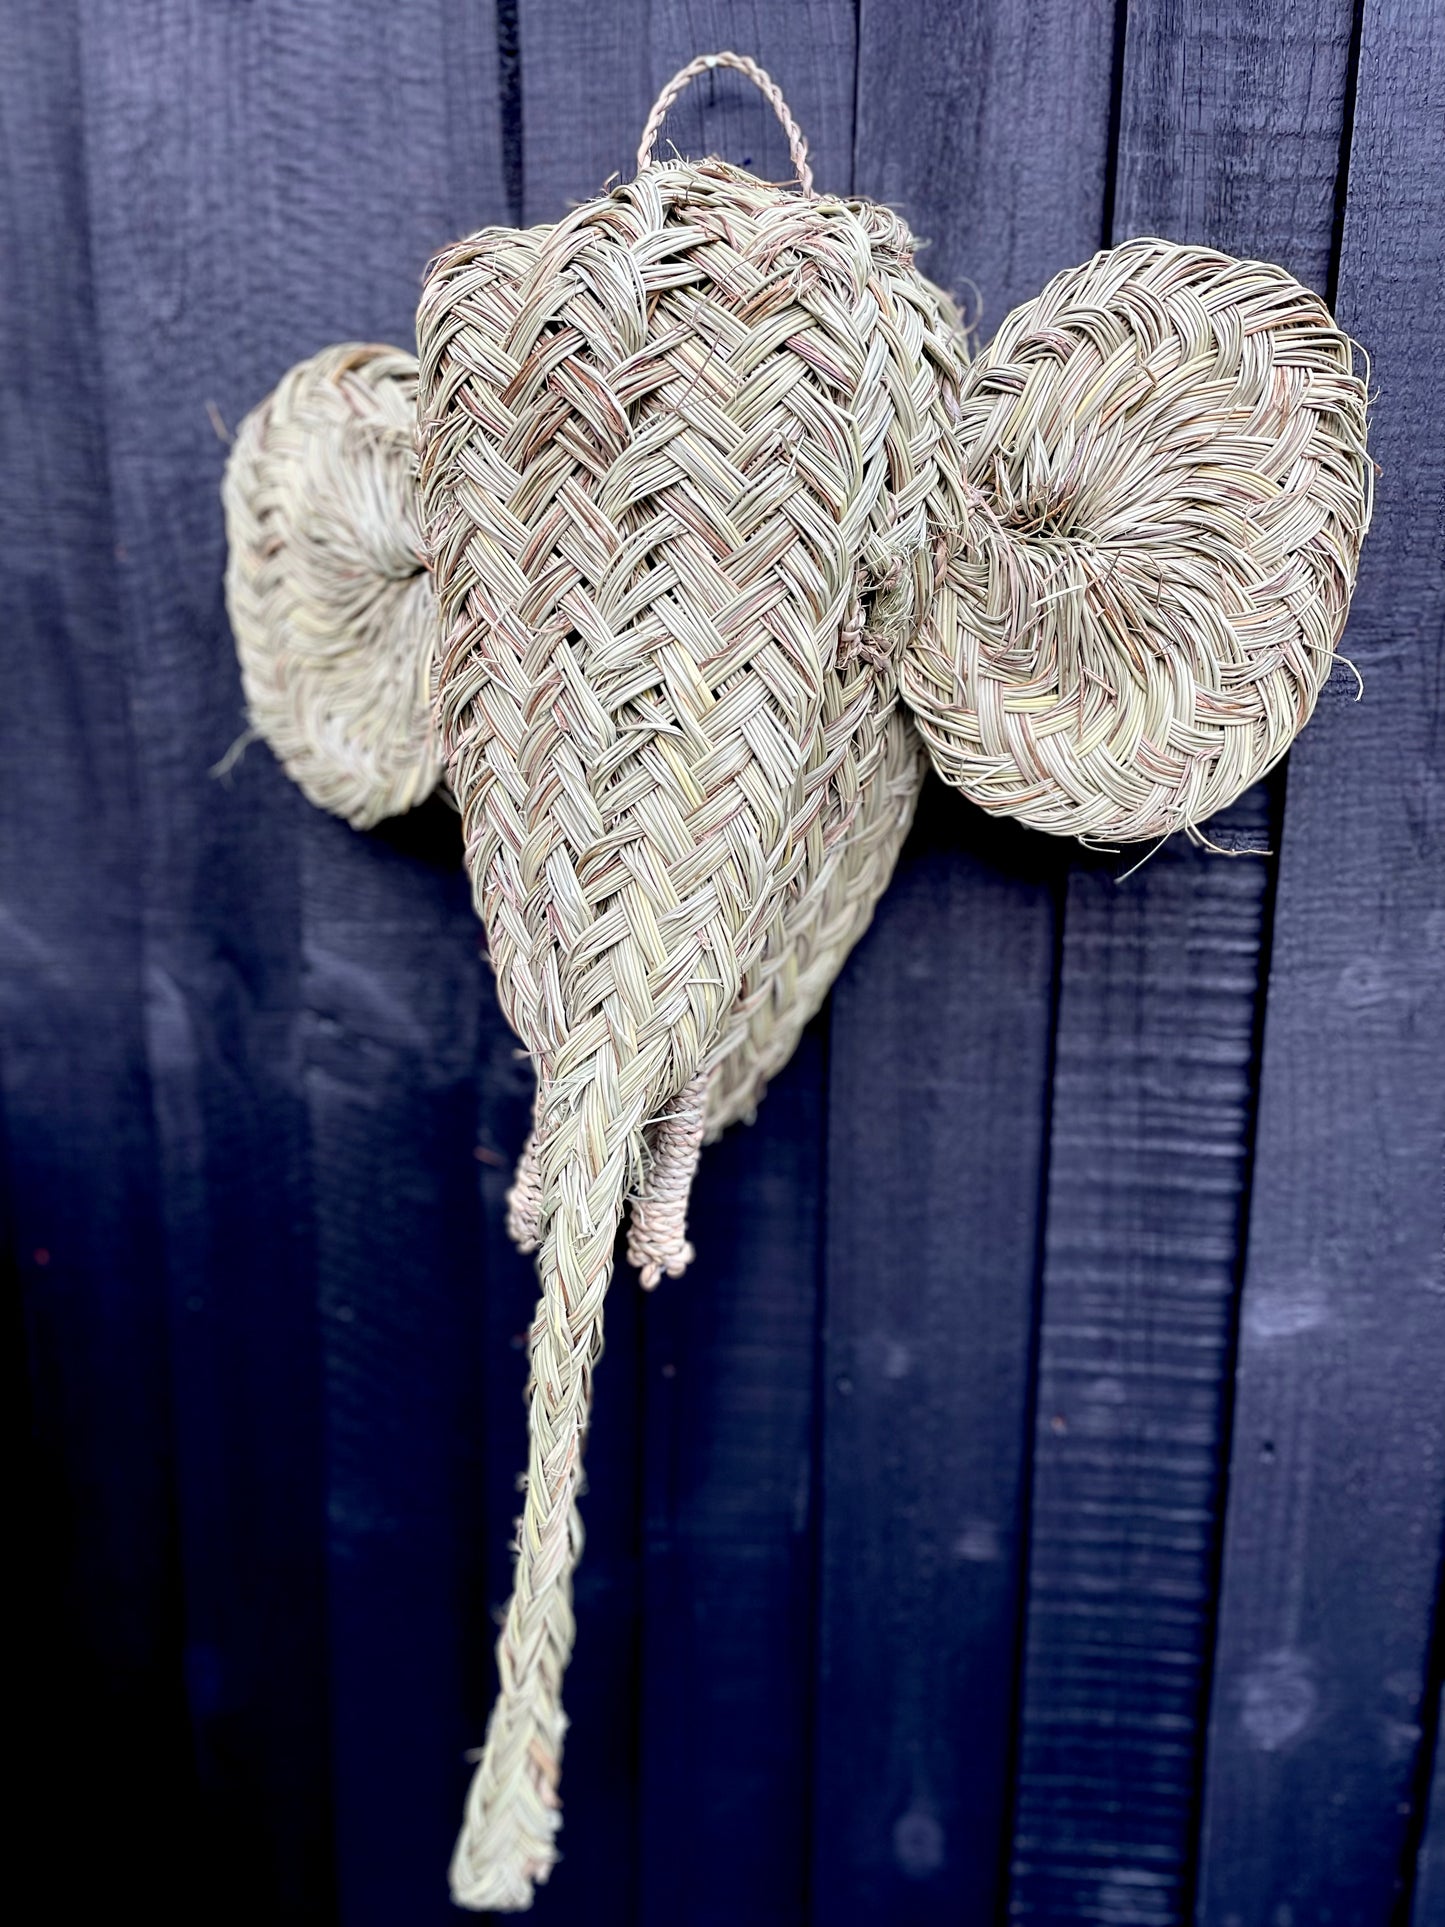 Decorative - Hand Woven Rattan Head - Elephant